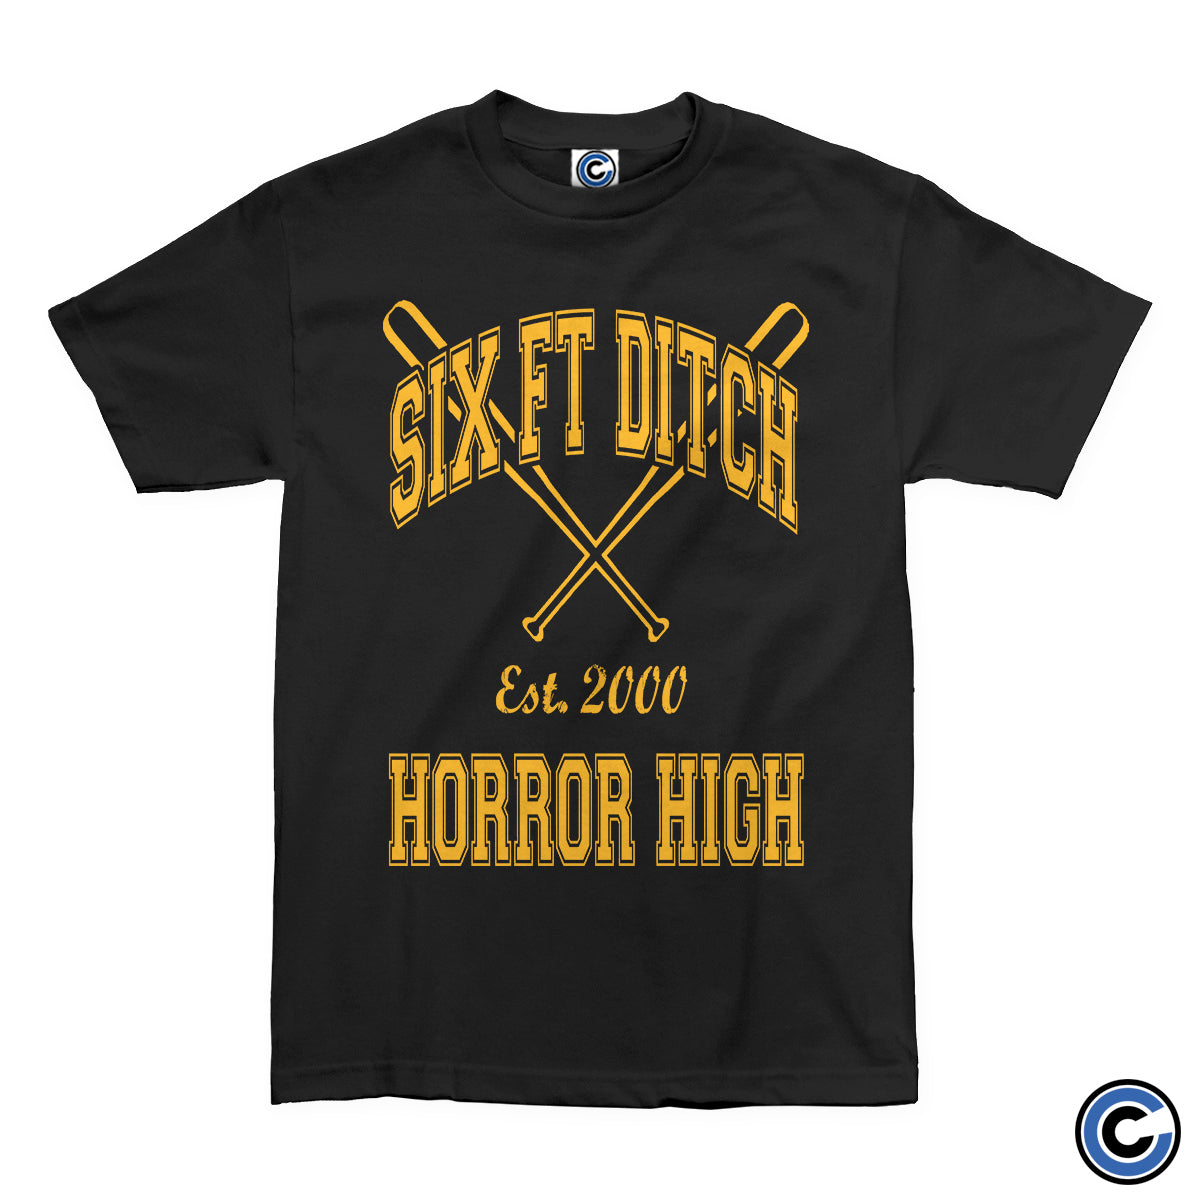 Six Ft Ditch "Horror High Black" Shirt